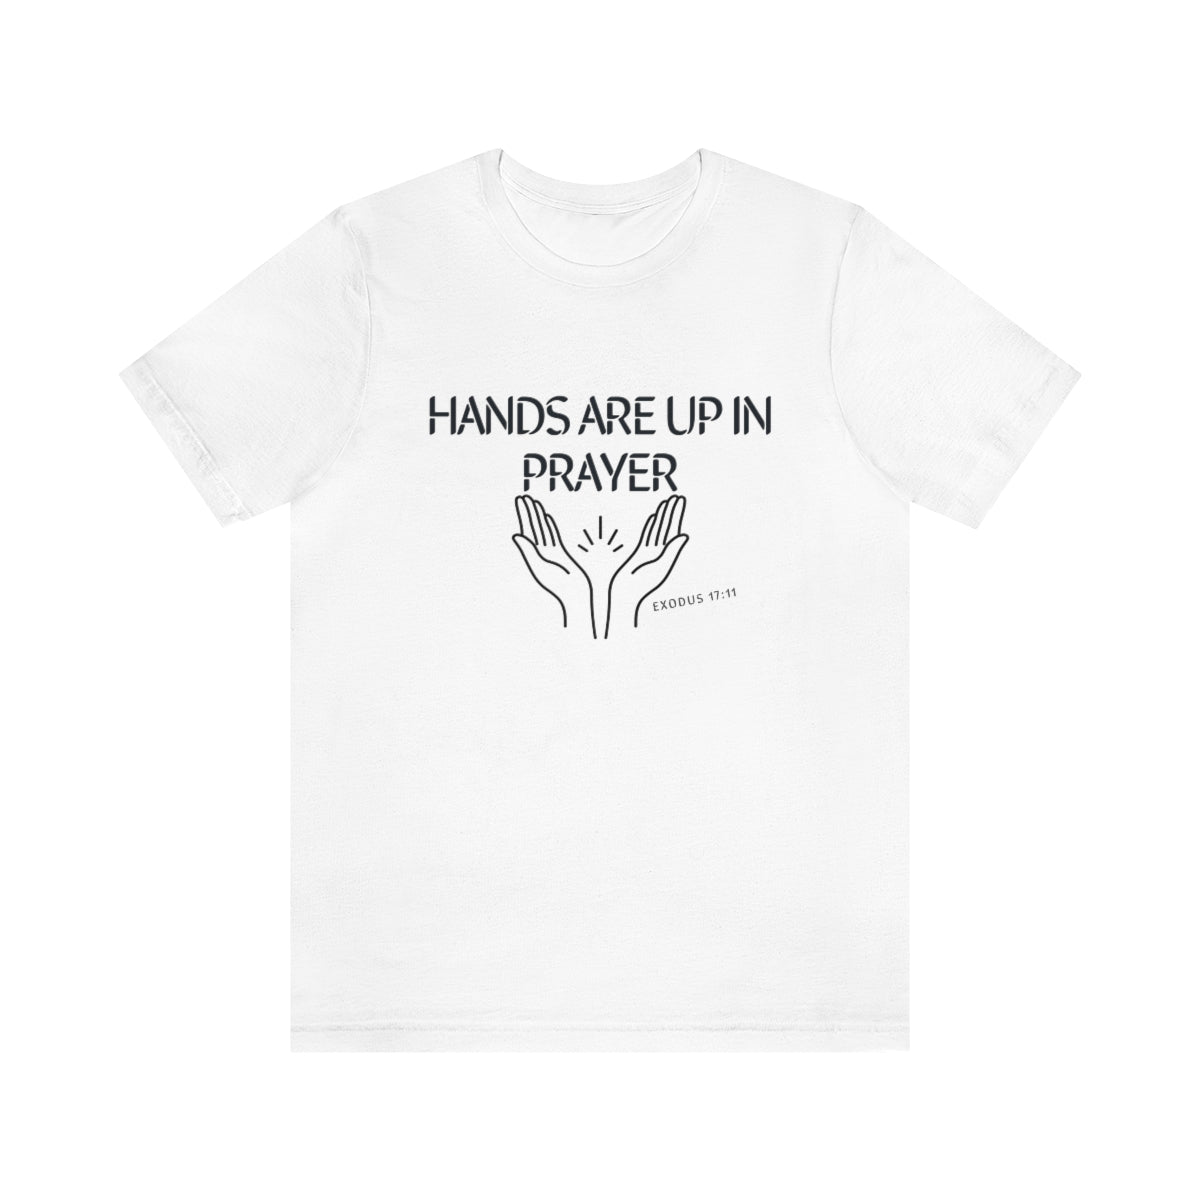 HANDS UP IN PRAYER T-SHIRT-T-Shirt-White-S-mysticalcherry